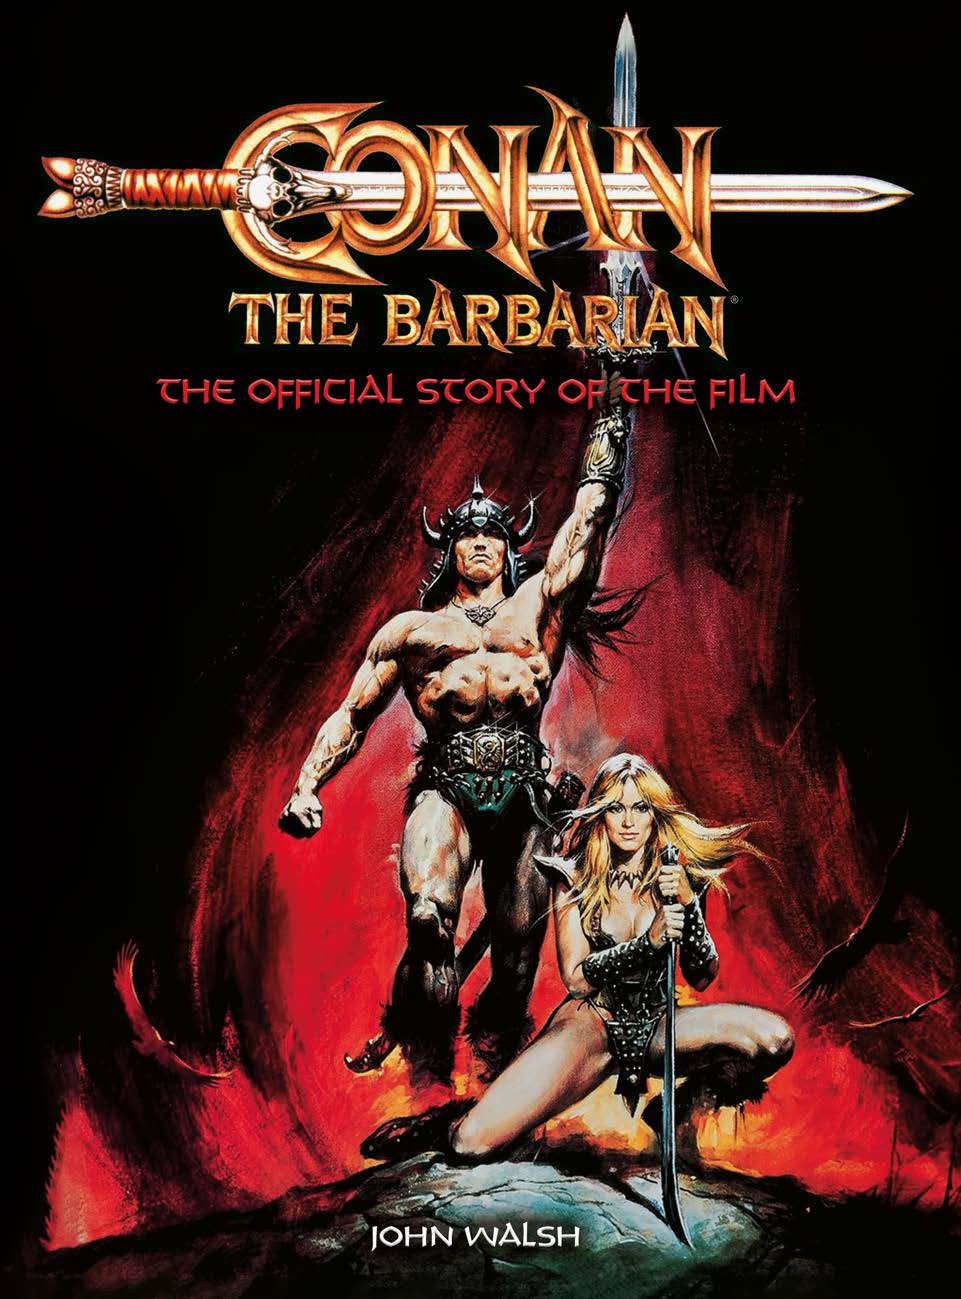 FULL MOVIE: Conan The Barbarian (1982)